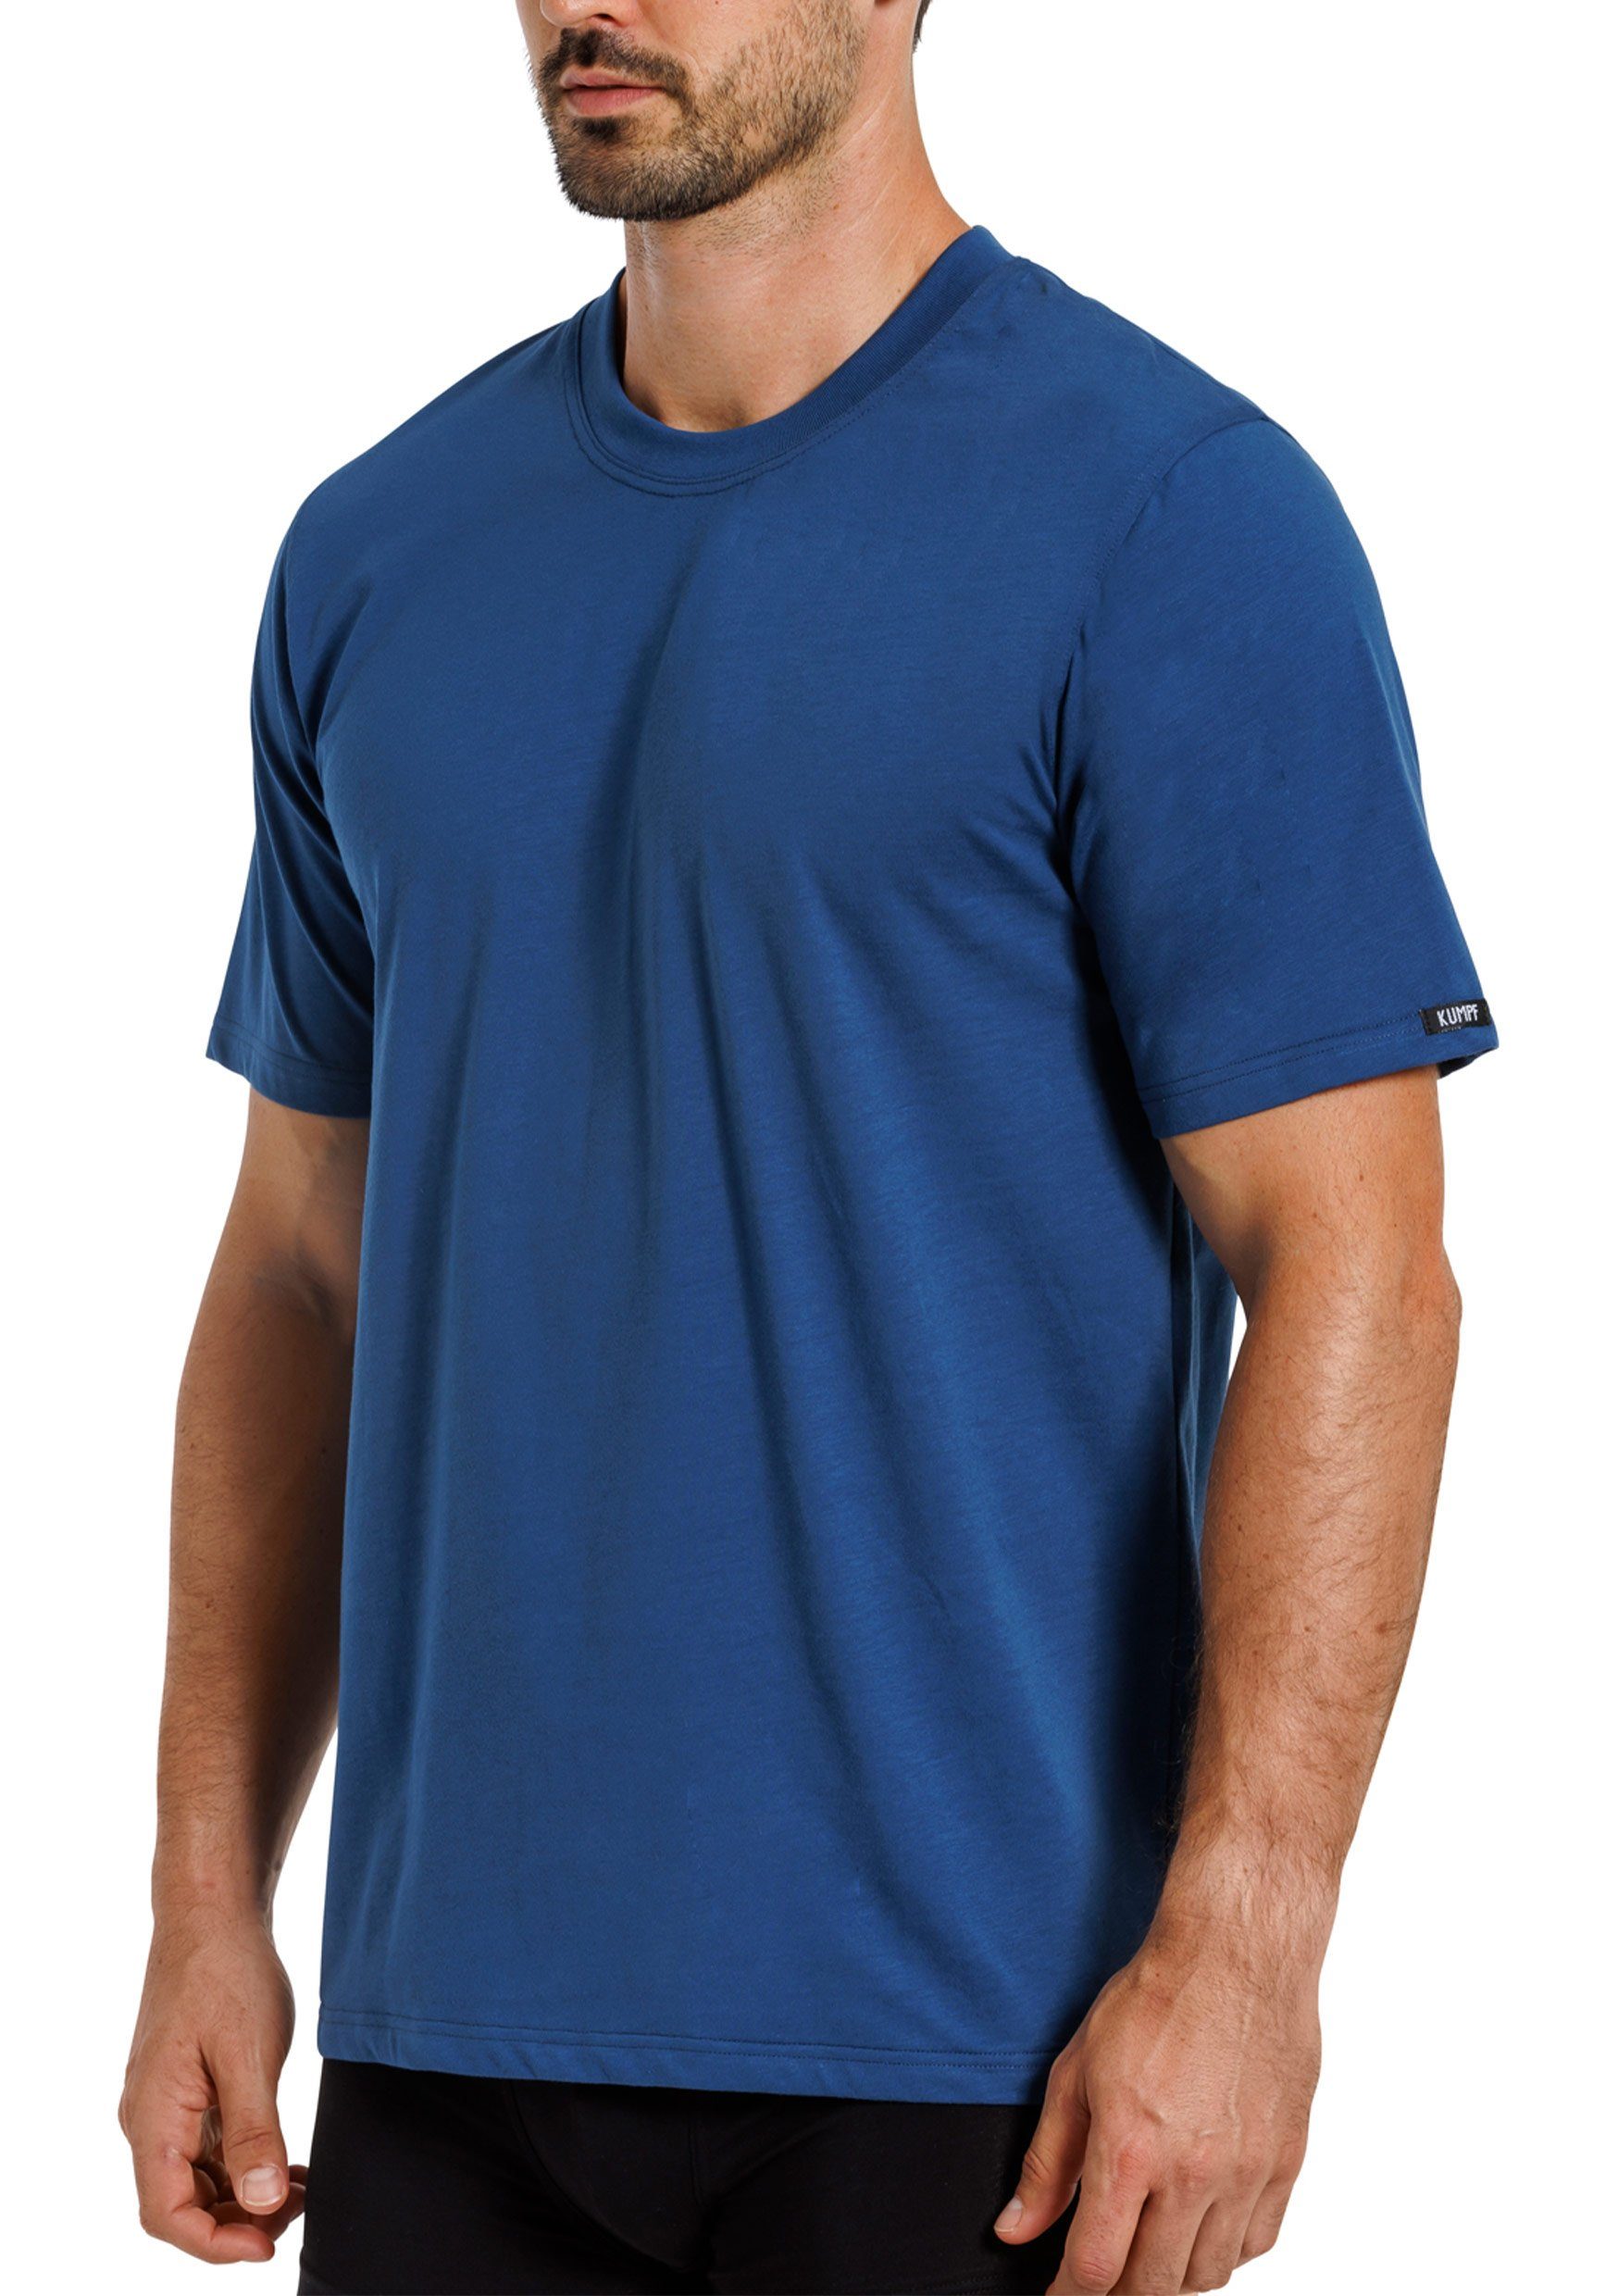 KUMPF Unterziehshirt Herren Cotton (Stück, Arm Markenqualität Bio T-Shirt darkblue hohe 1/2 1-St)